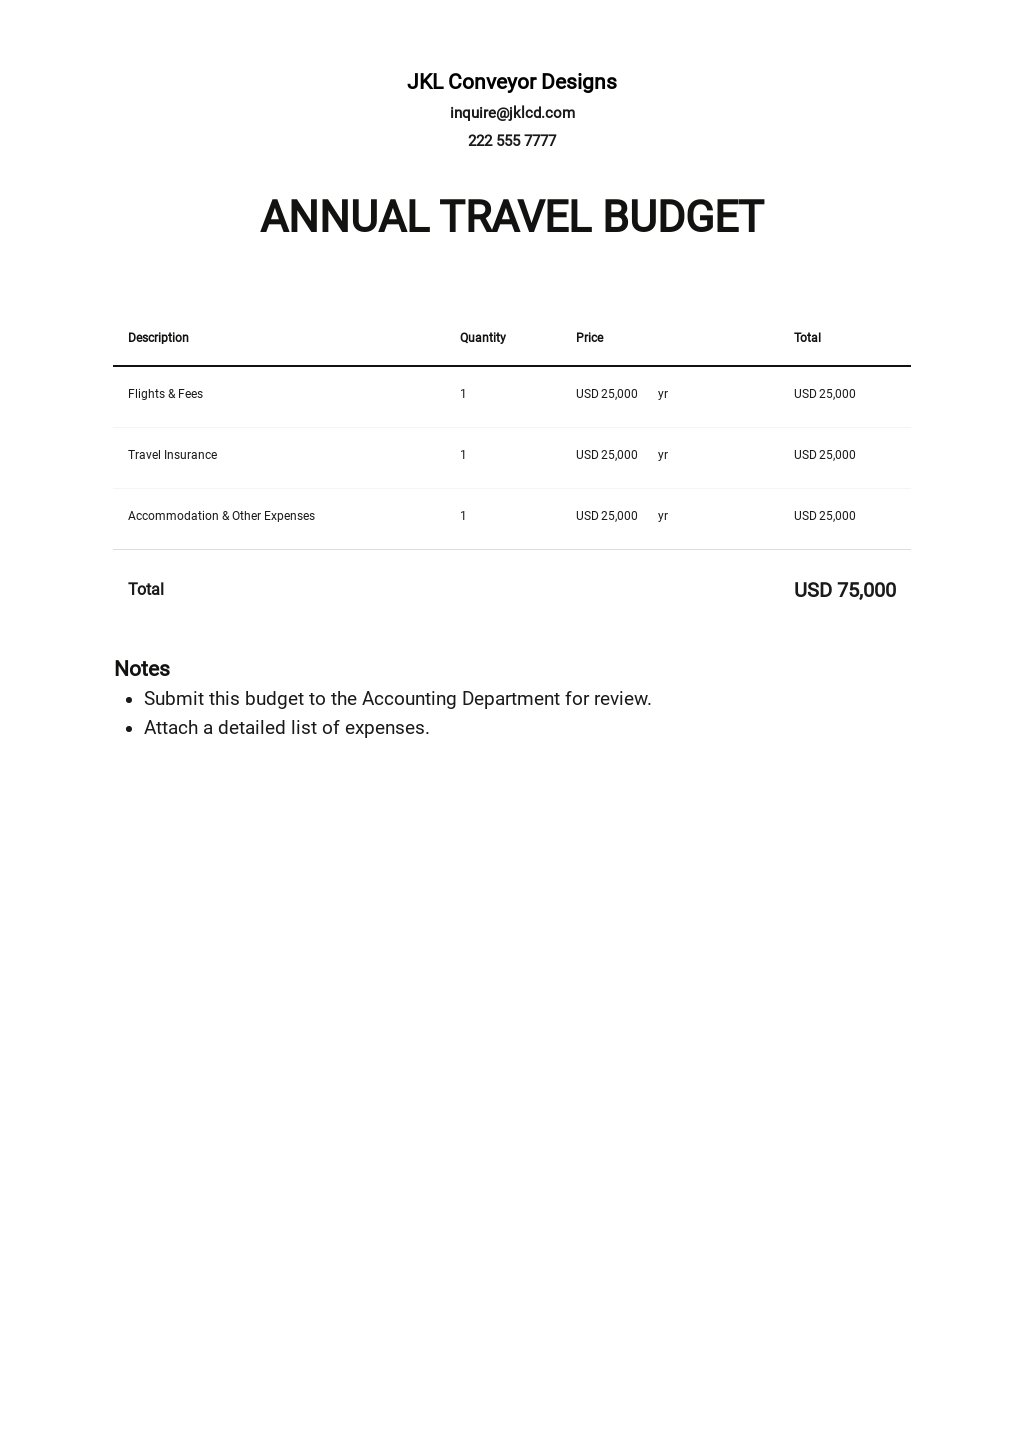 Annual Travel Budget Template.jpe